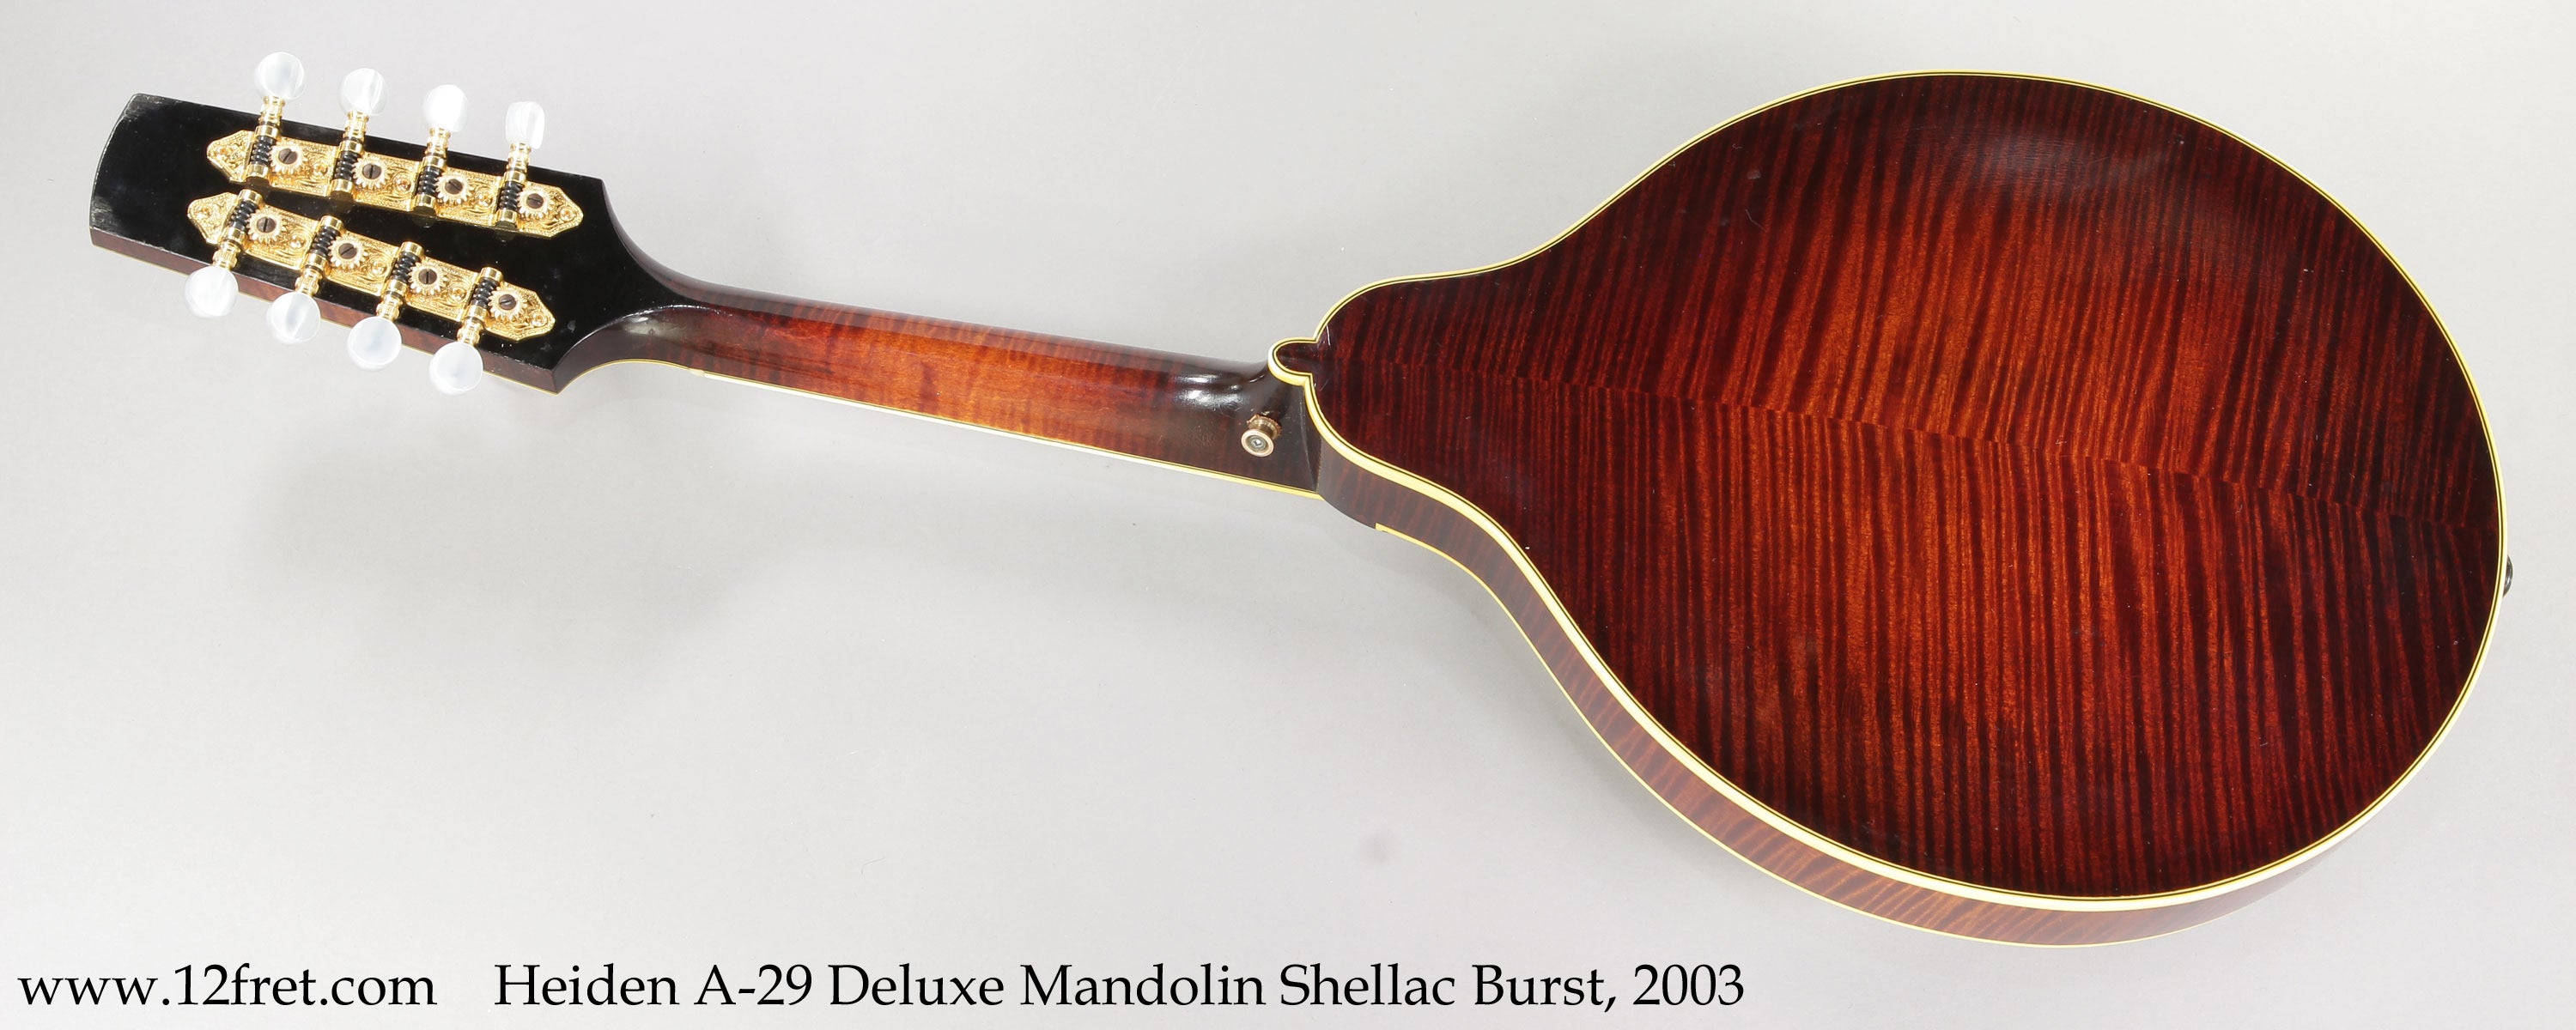 Heiden A-29 Deluxe Mandolin Shellac Burst, 2003 - The Twelfth Fret